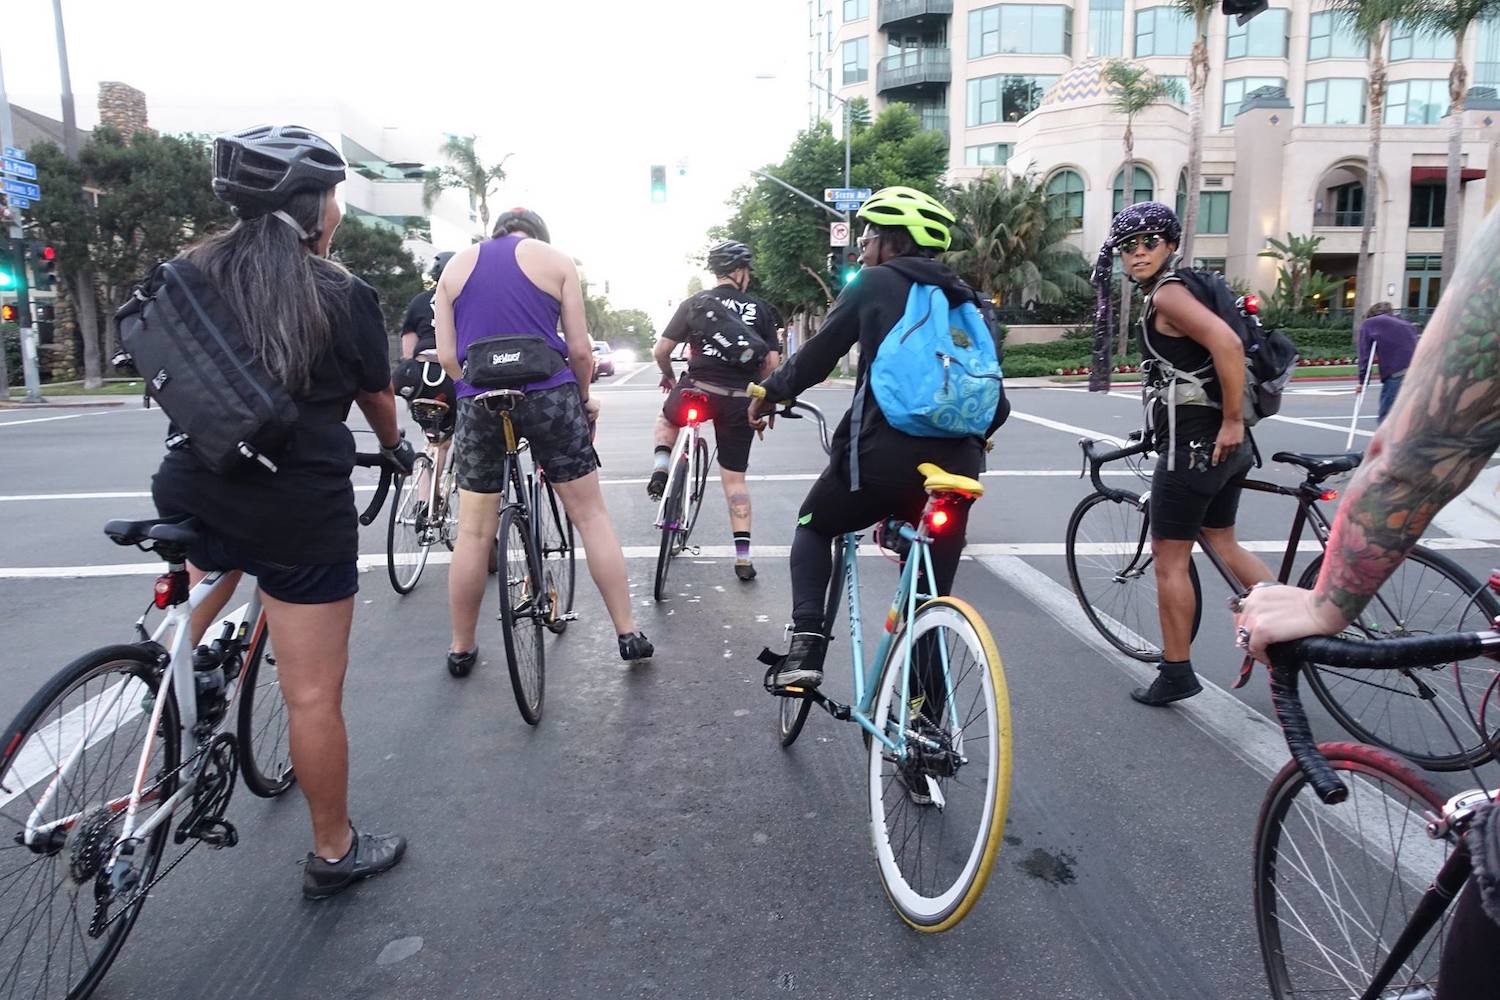 San Diego biking club SheWolves Thursday night bike rides LGBTQ+ friendly